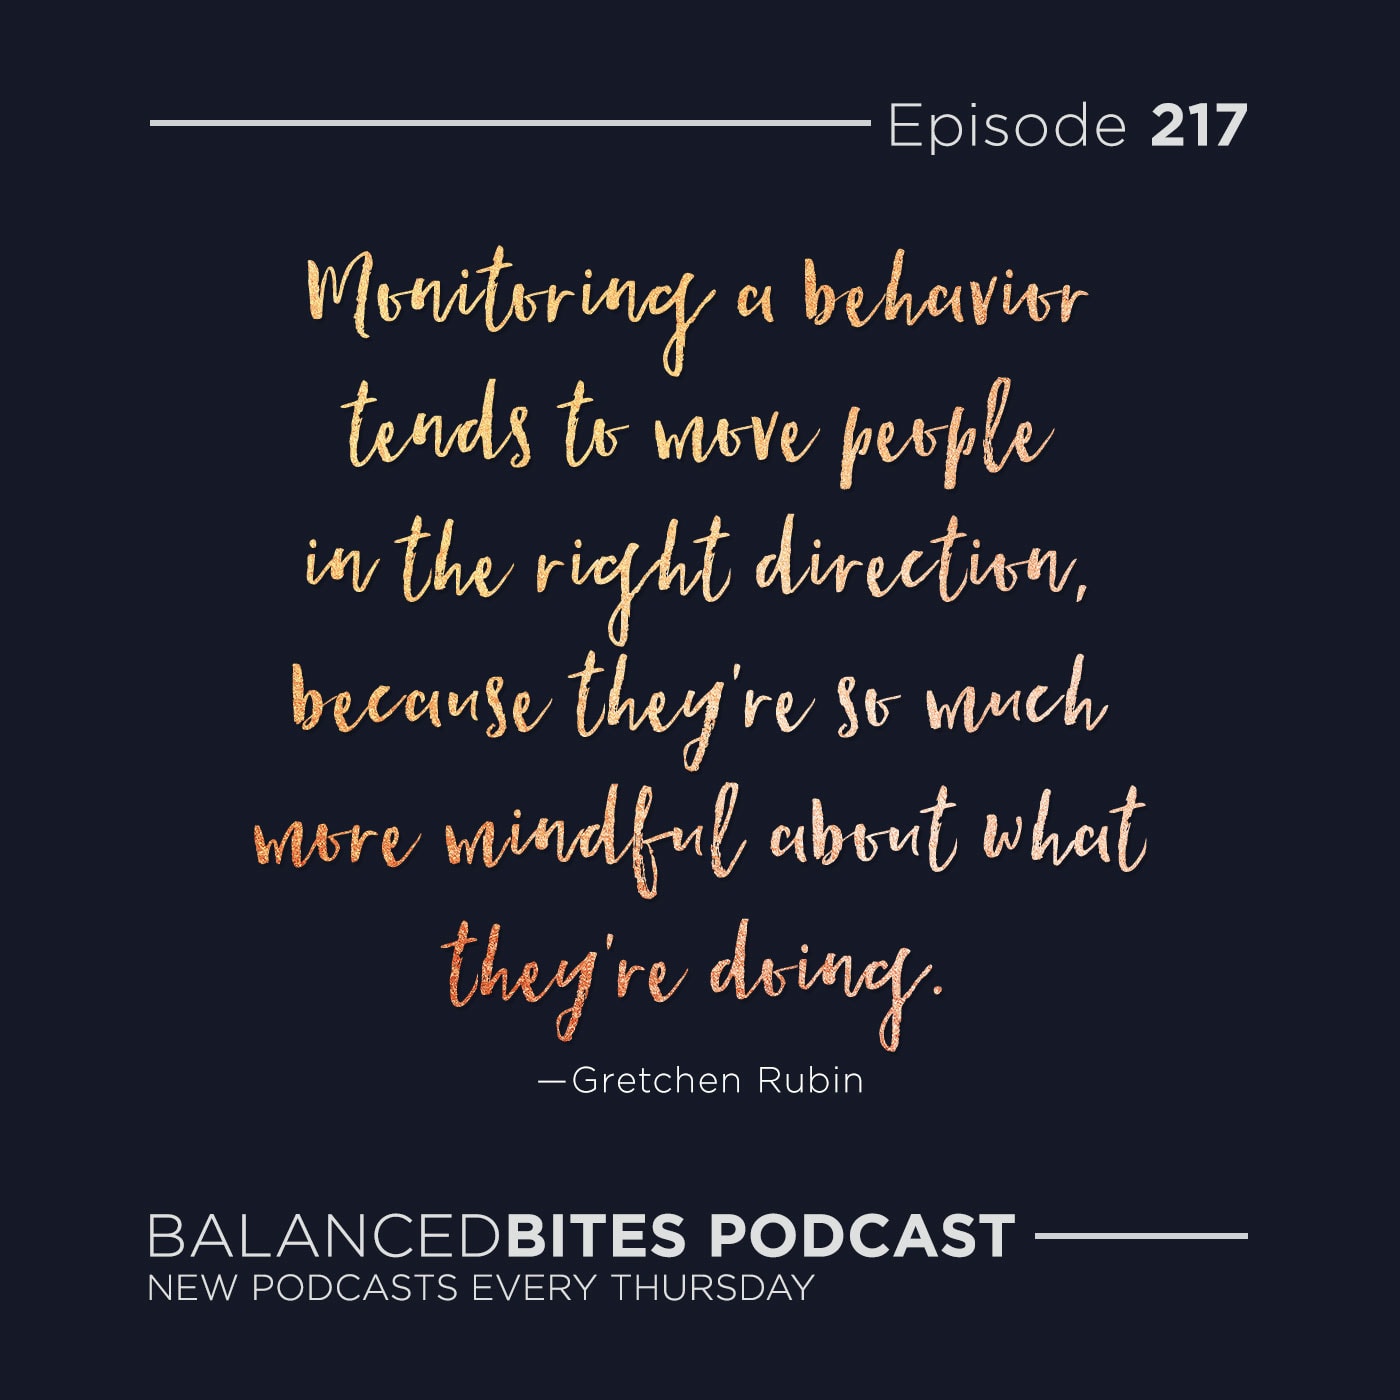 Balanced Bites Podcast | Diane Sanfilippo & Liz Wolfe